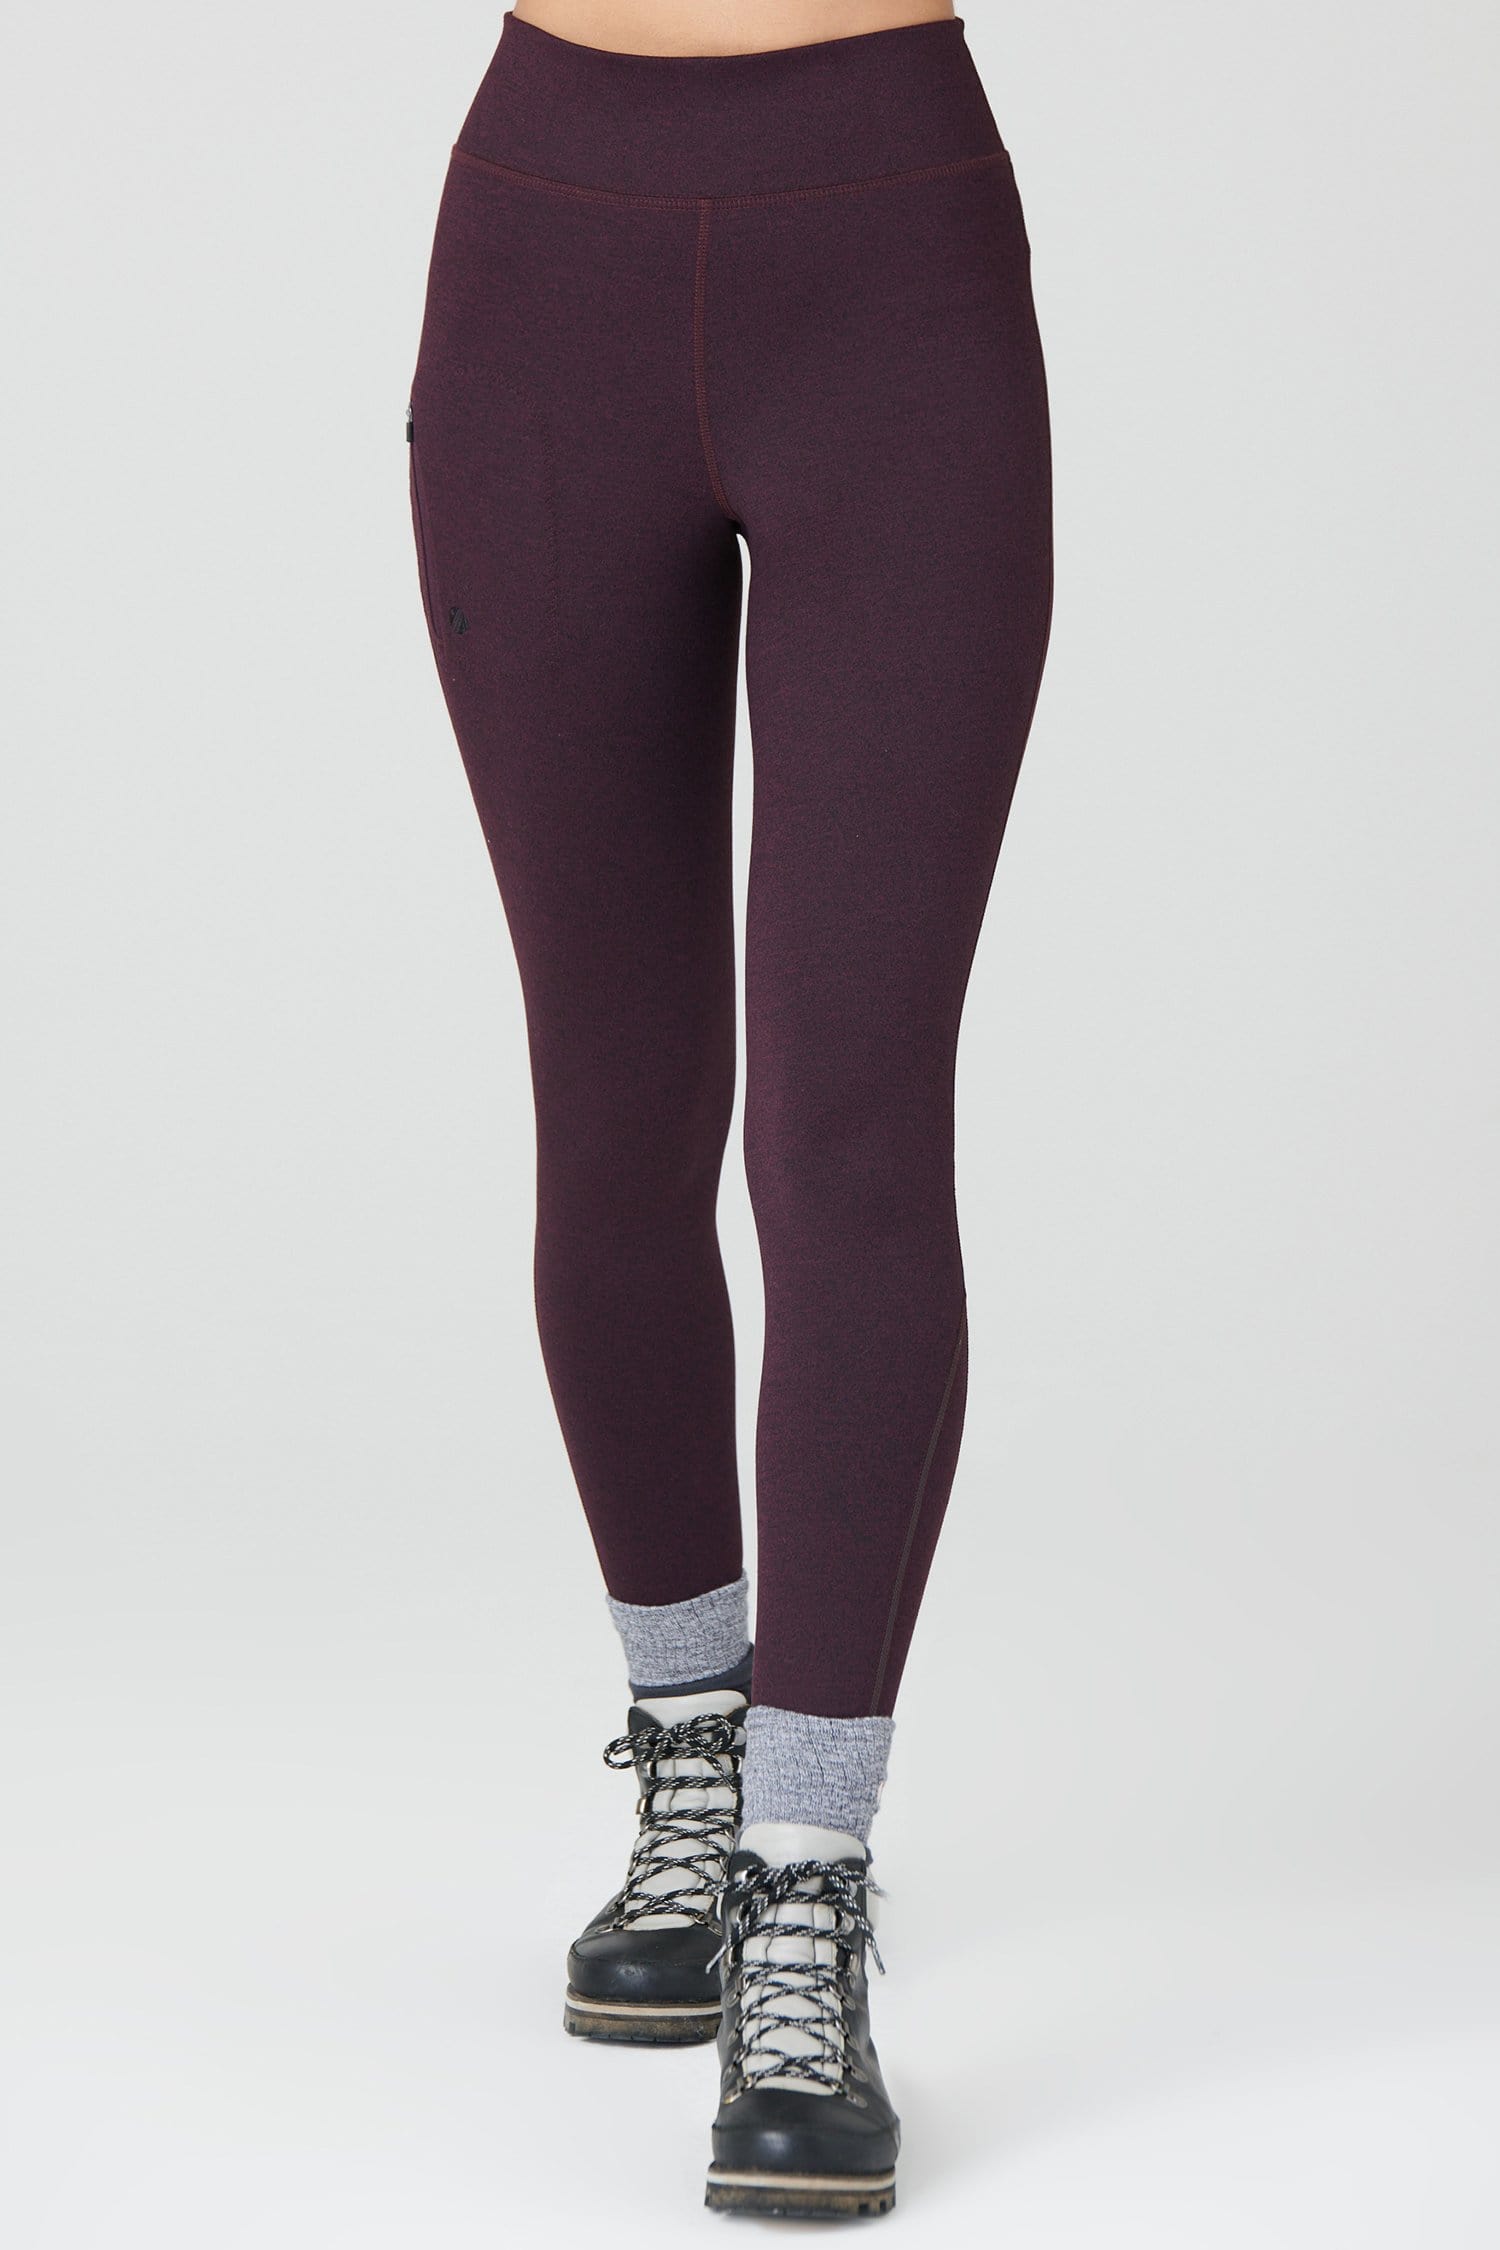 Thermal Outdoor Leggings - Aubergine - Medium / Uk12 - Womens - Acai Outdoorwear